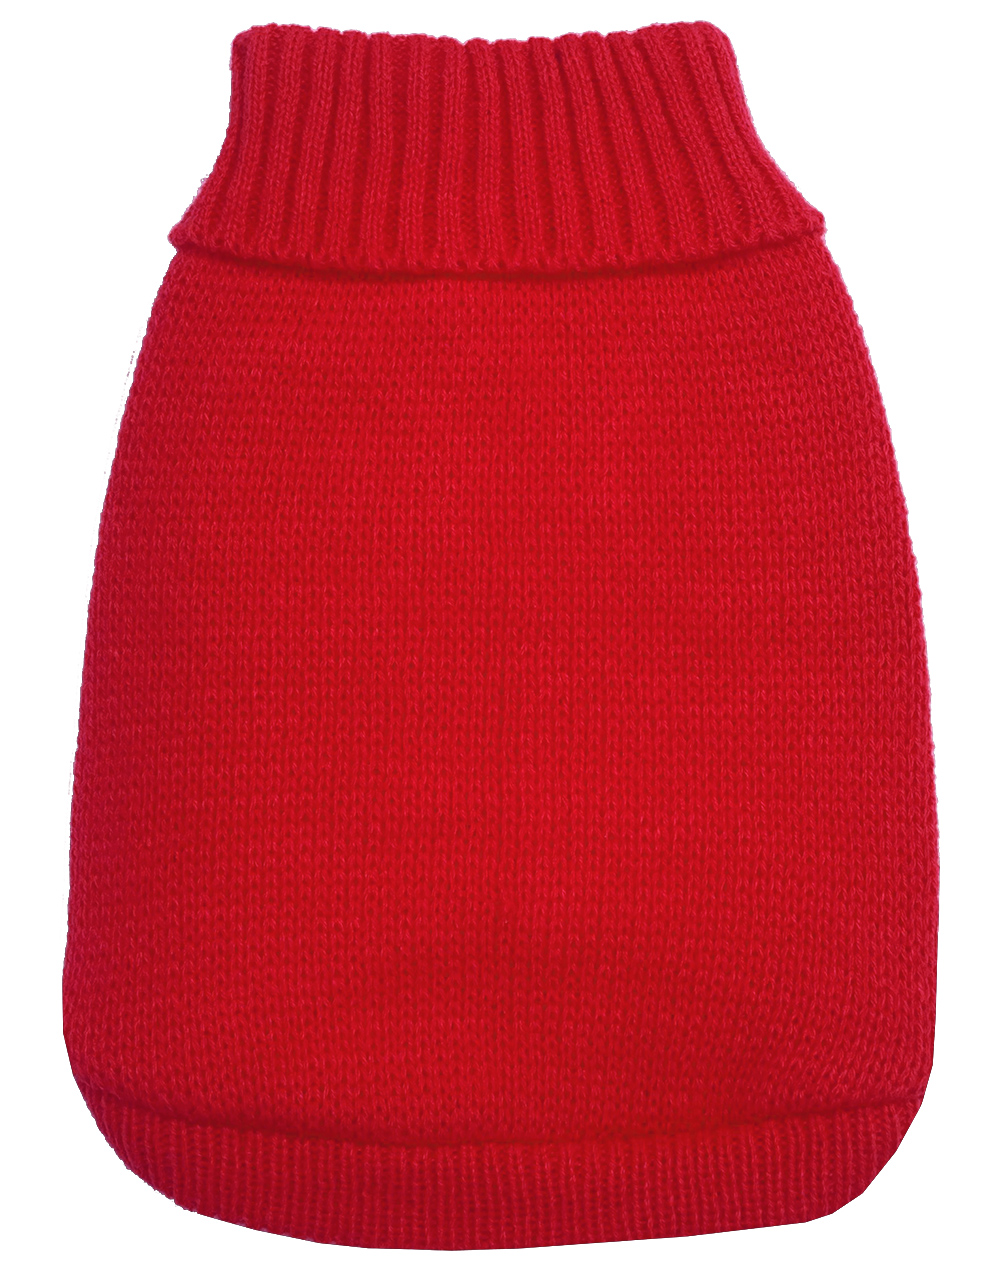 Knit Pet Sweater Red Size XXL